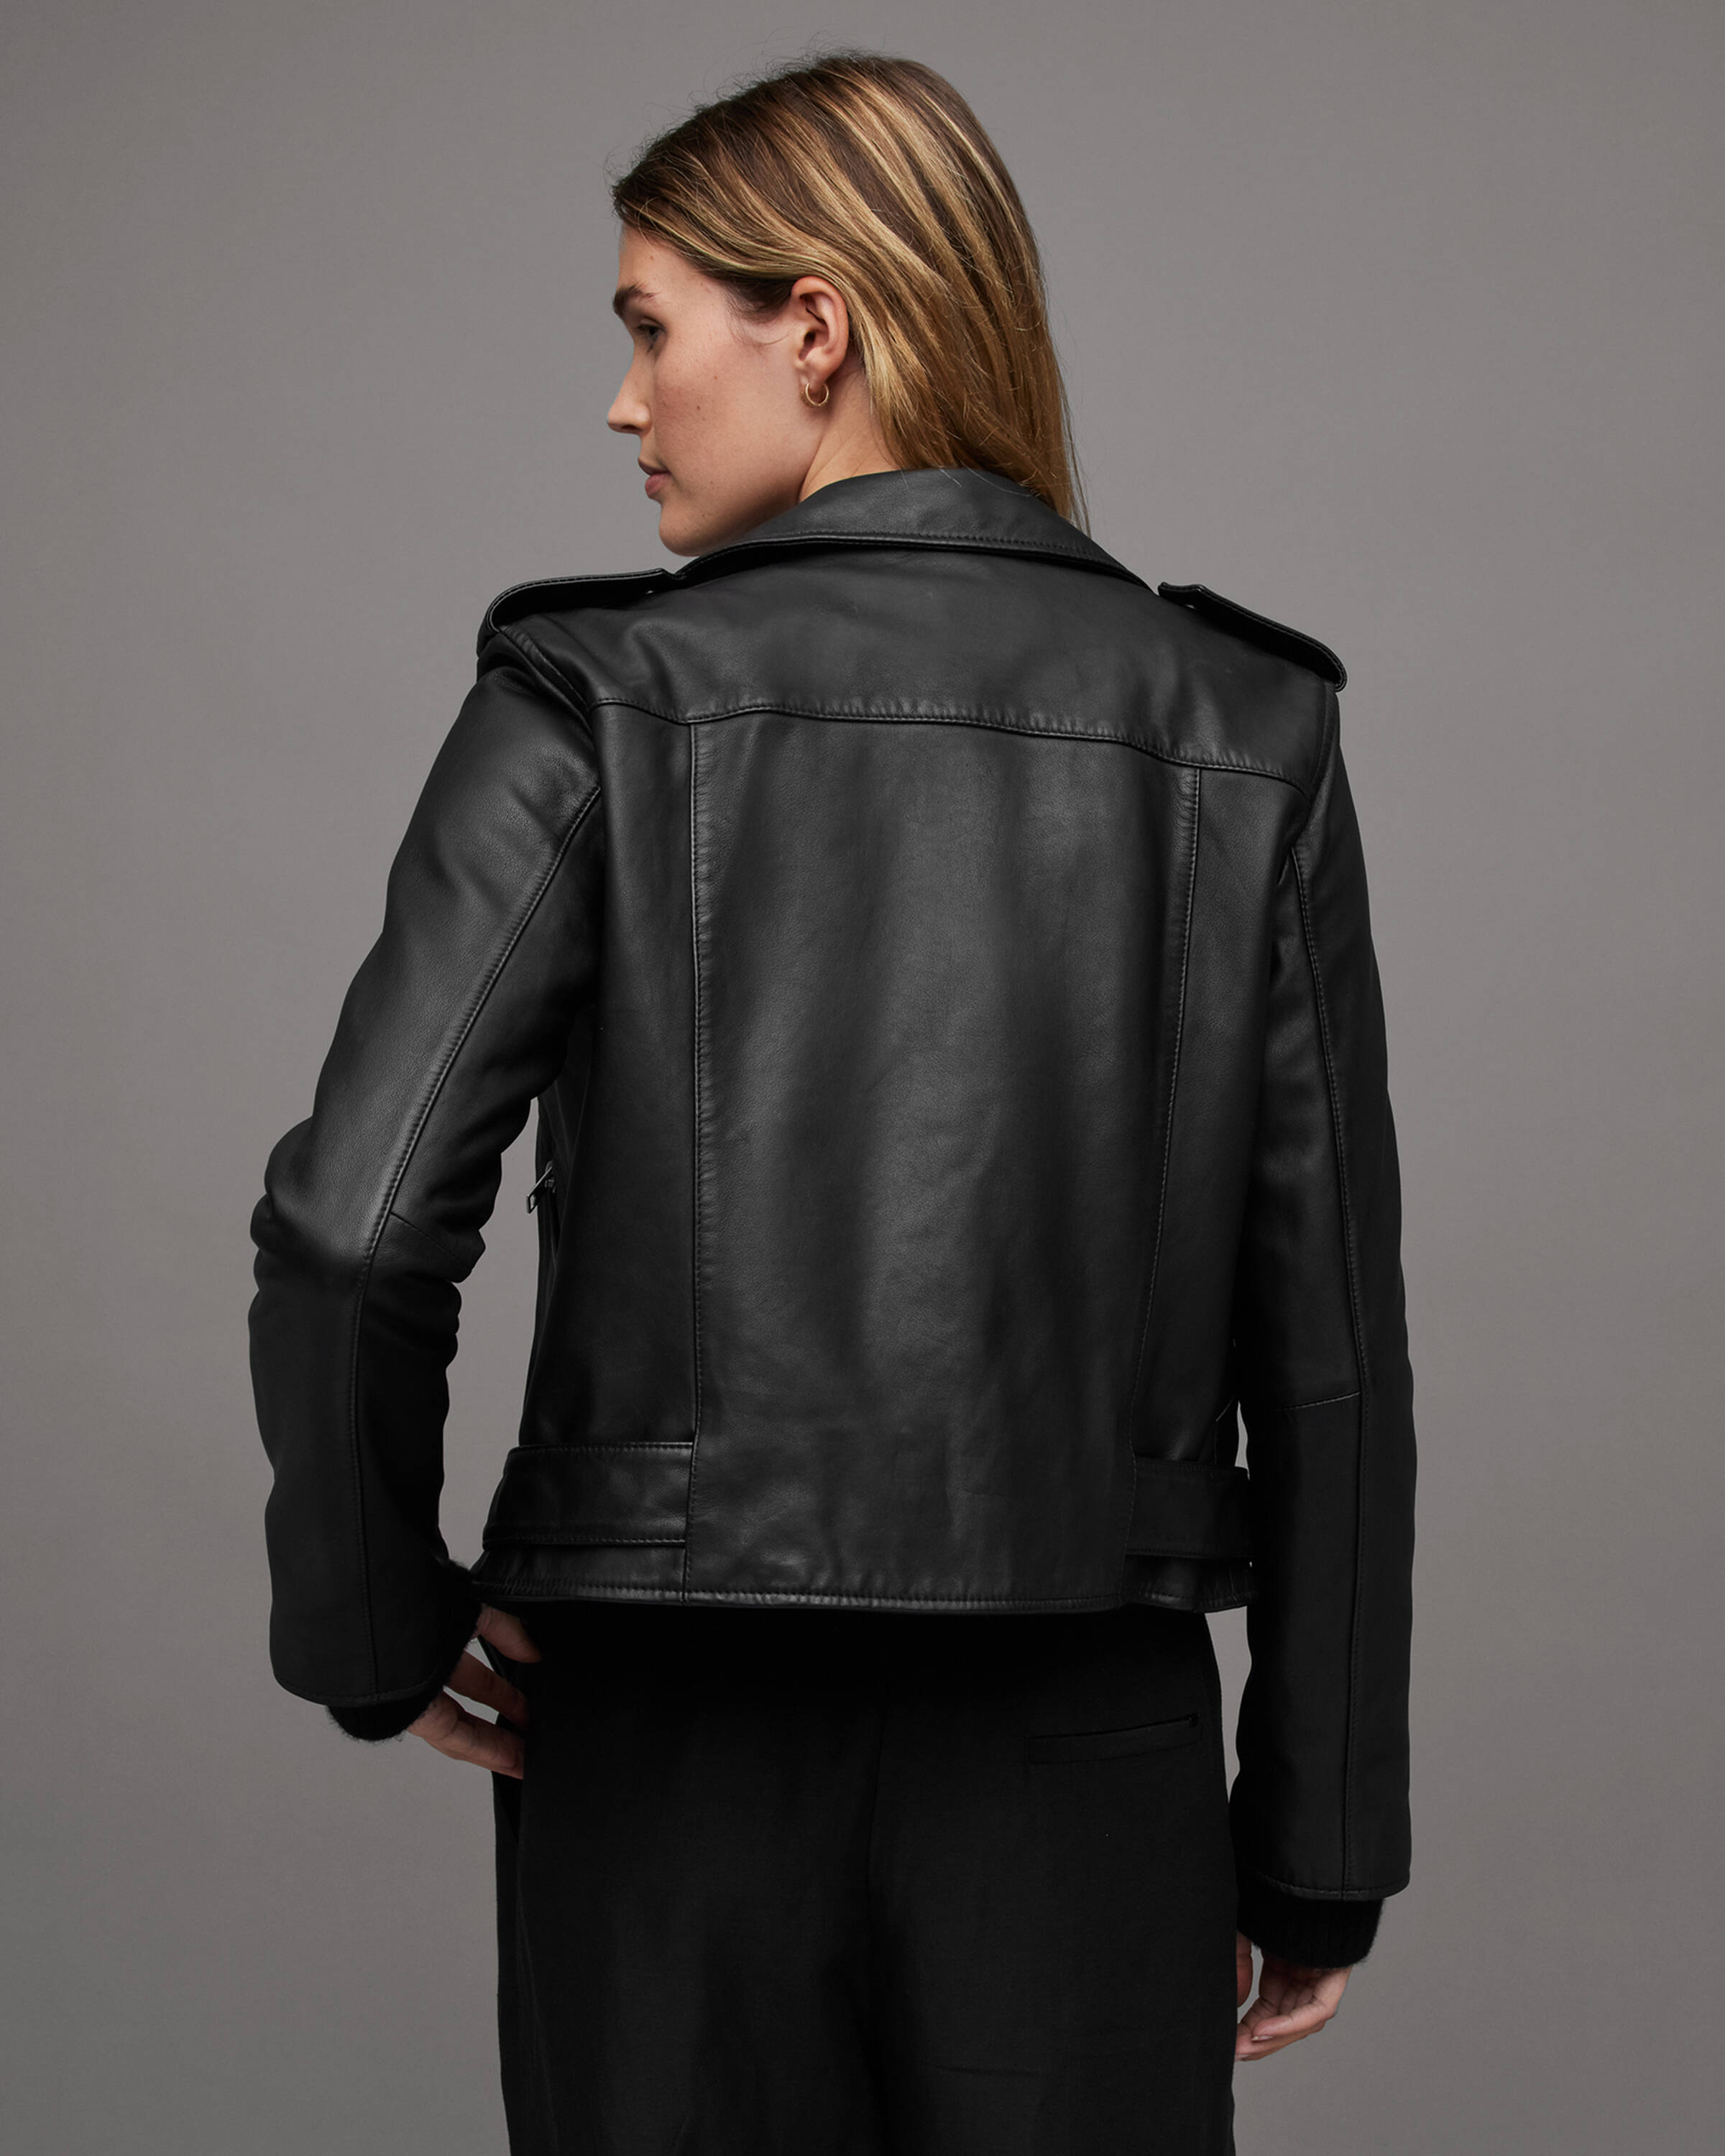 Women's Balfern Leather Jacket - Back View